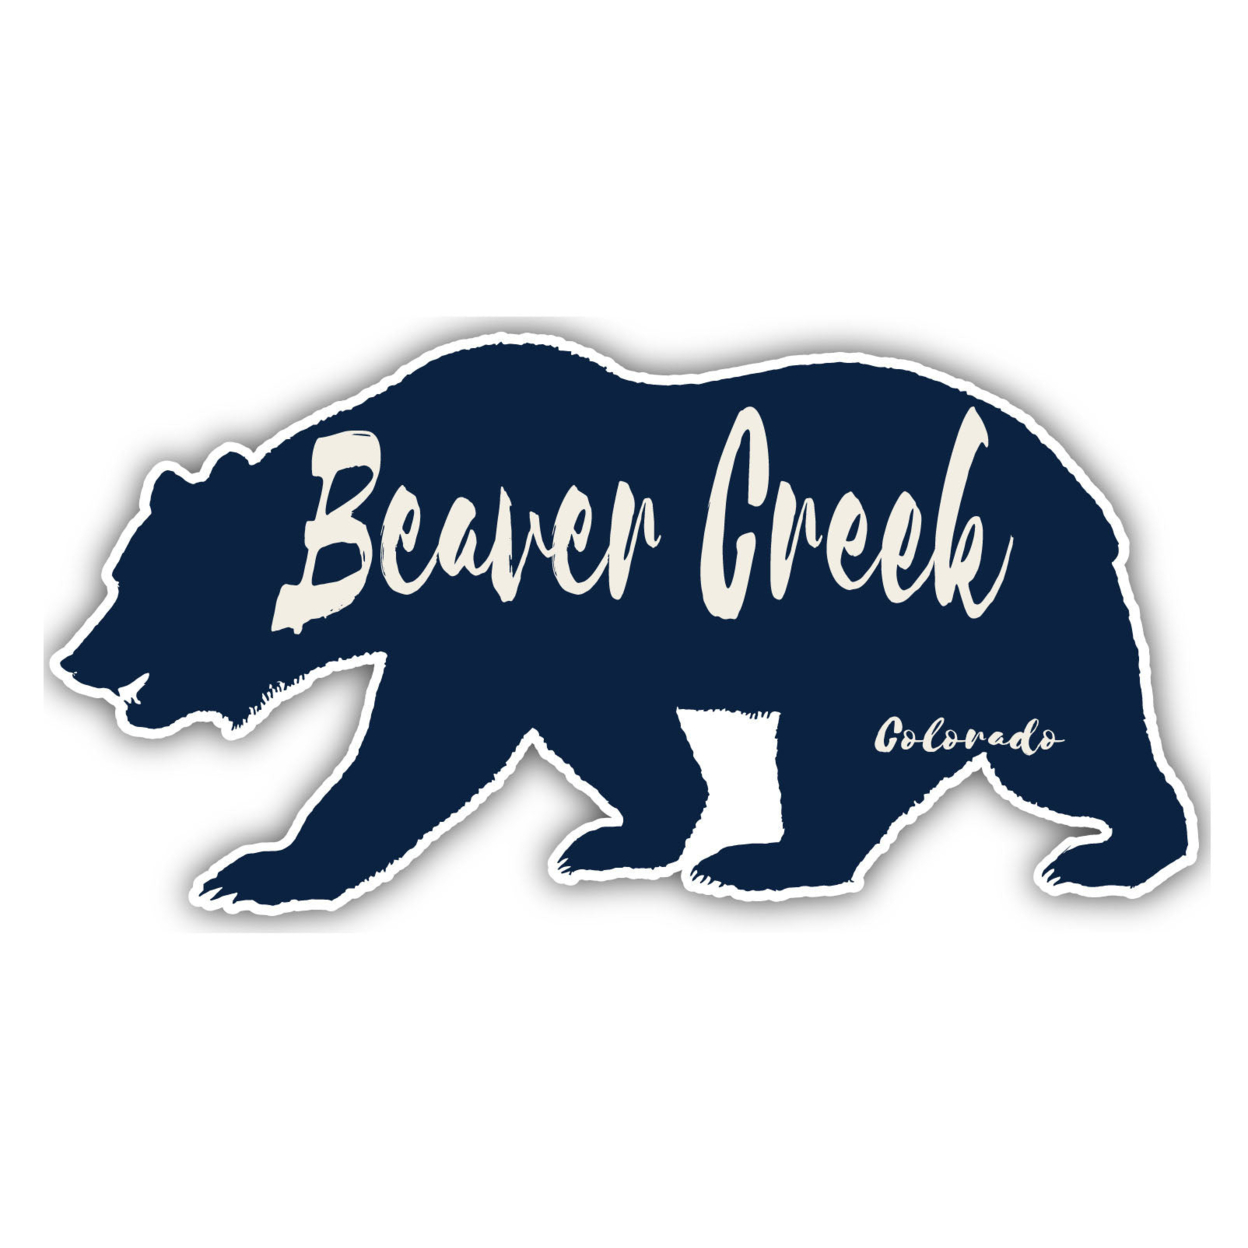 Beaver Creek Colorado Souvenir Decorative Stickers (Choose Theme And Size) - 4-Pack, 10-Inch, Bear